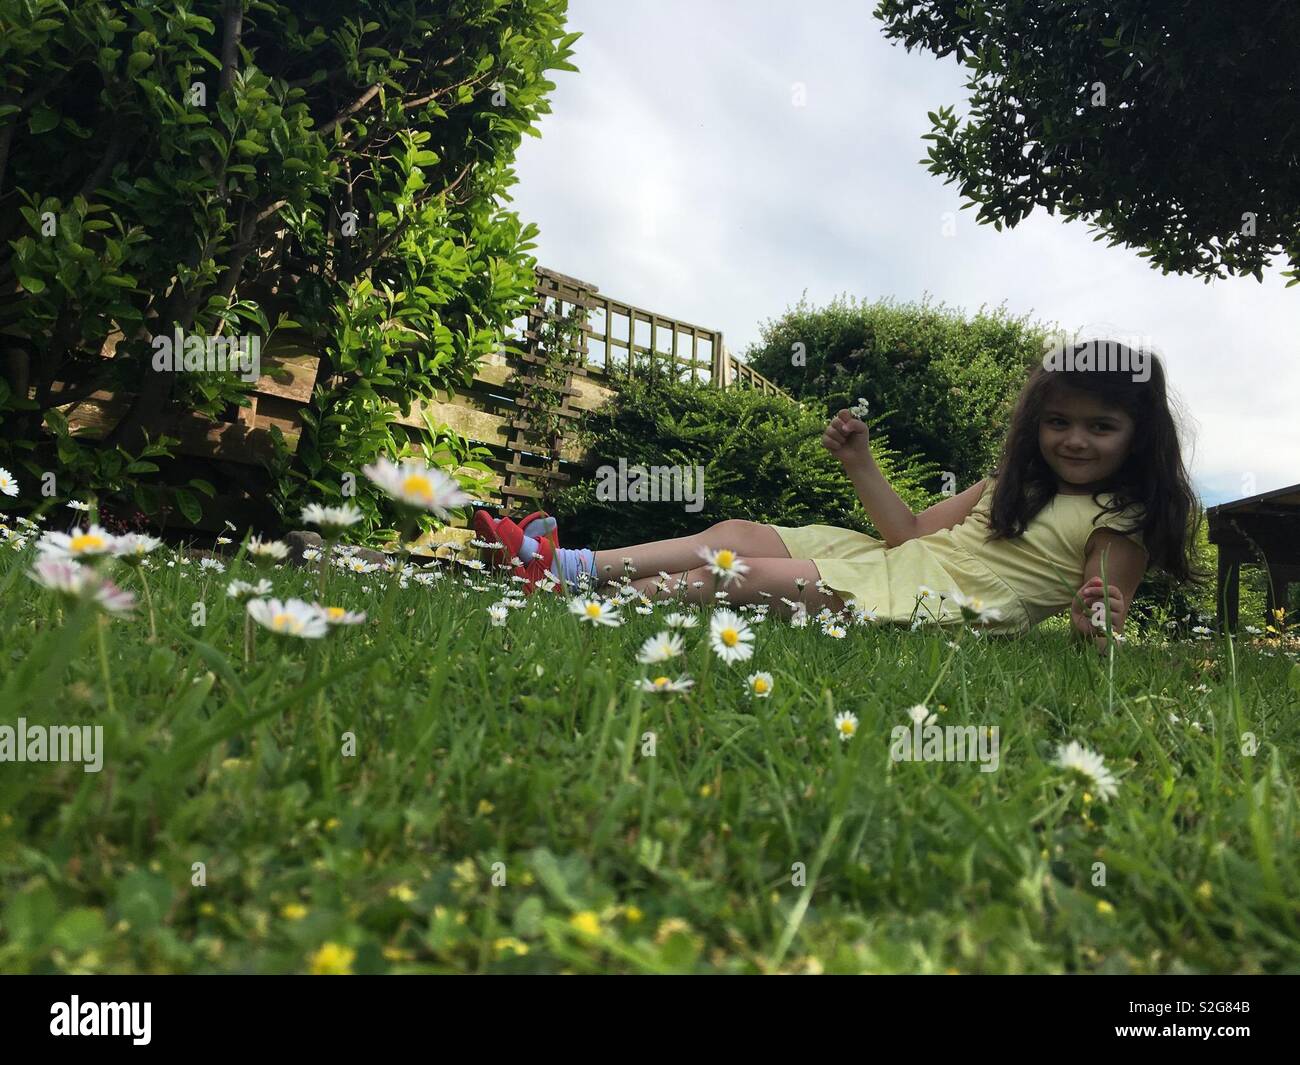 Girl sitting in garden of Daisy’s Stock Photo